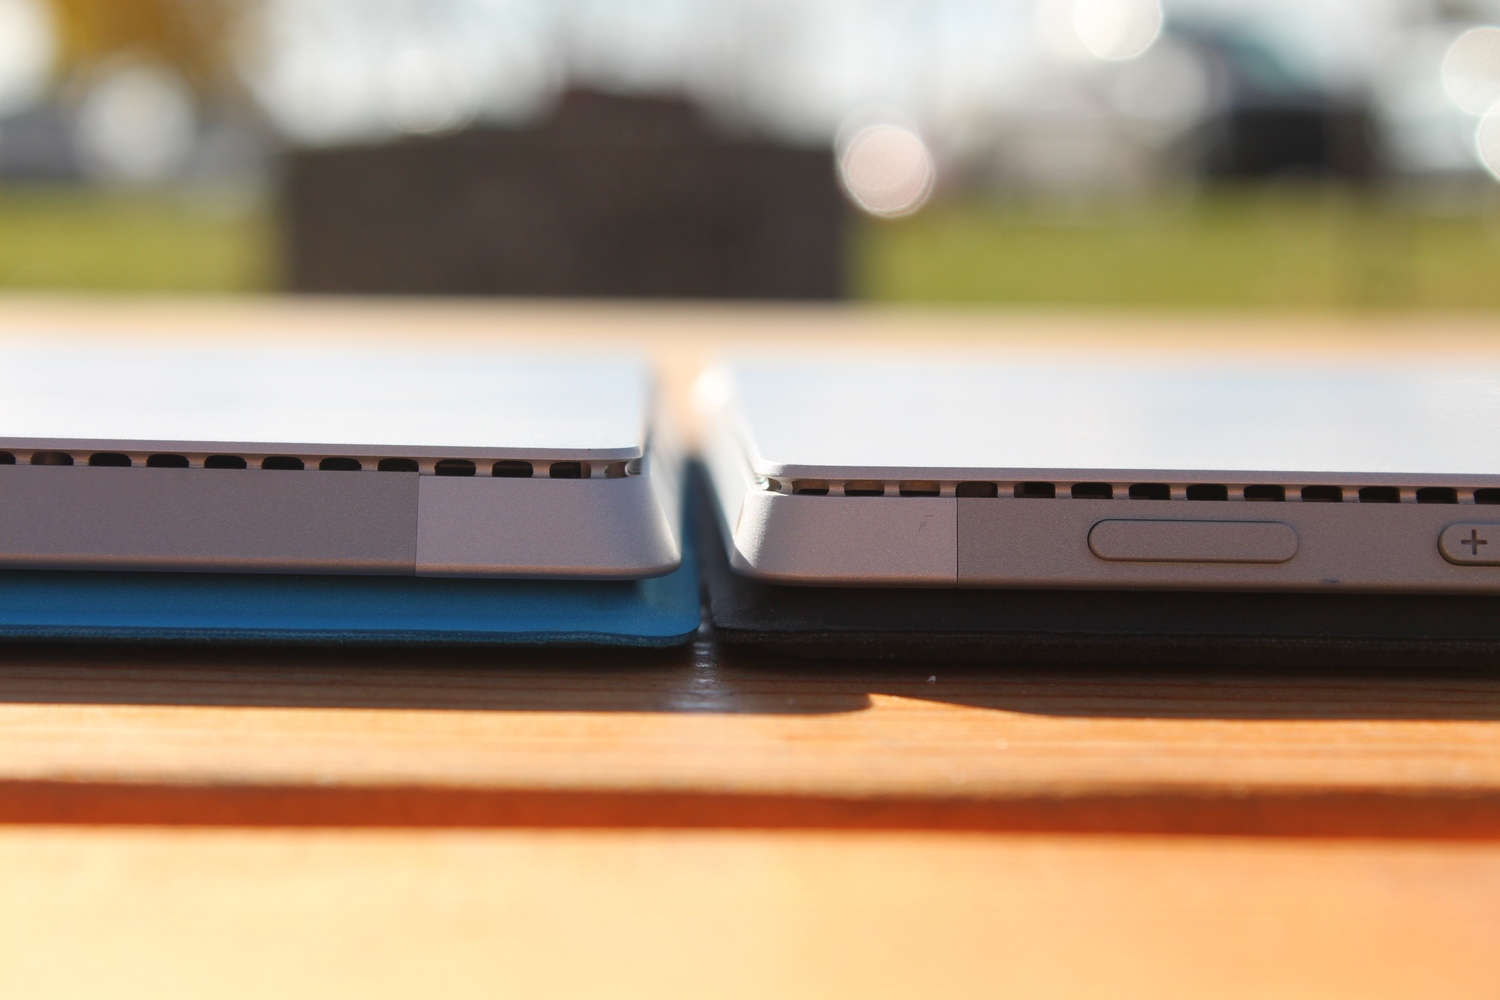 Surface Pro 4 Design: Thinner, Lighter, Hybrid Cooling - The